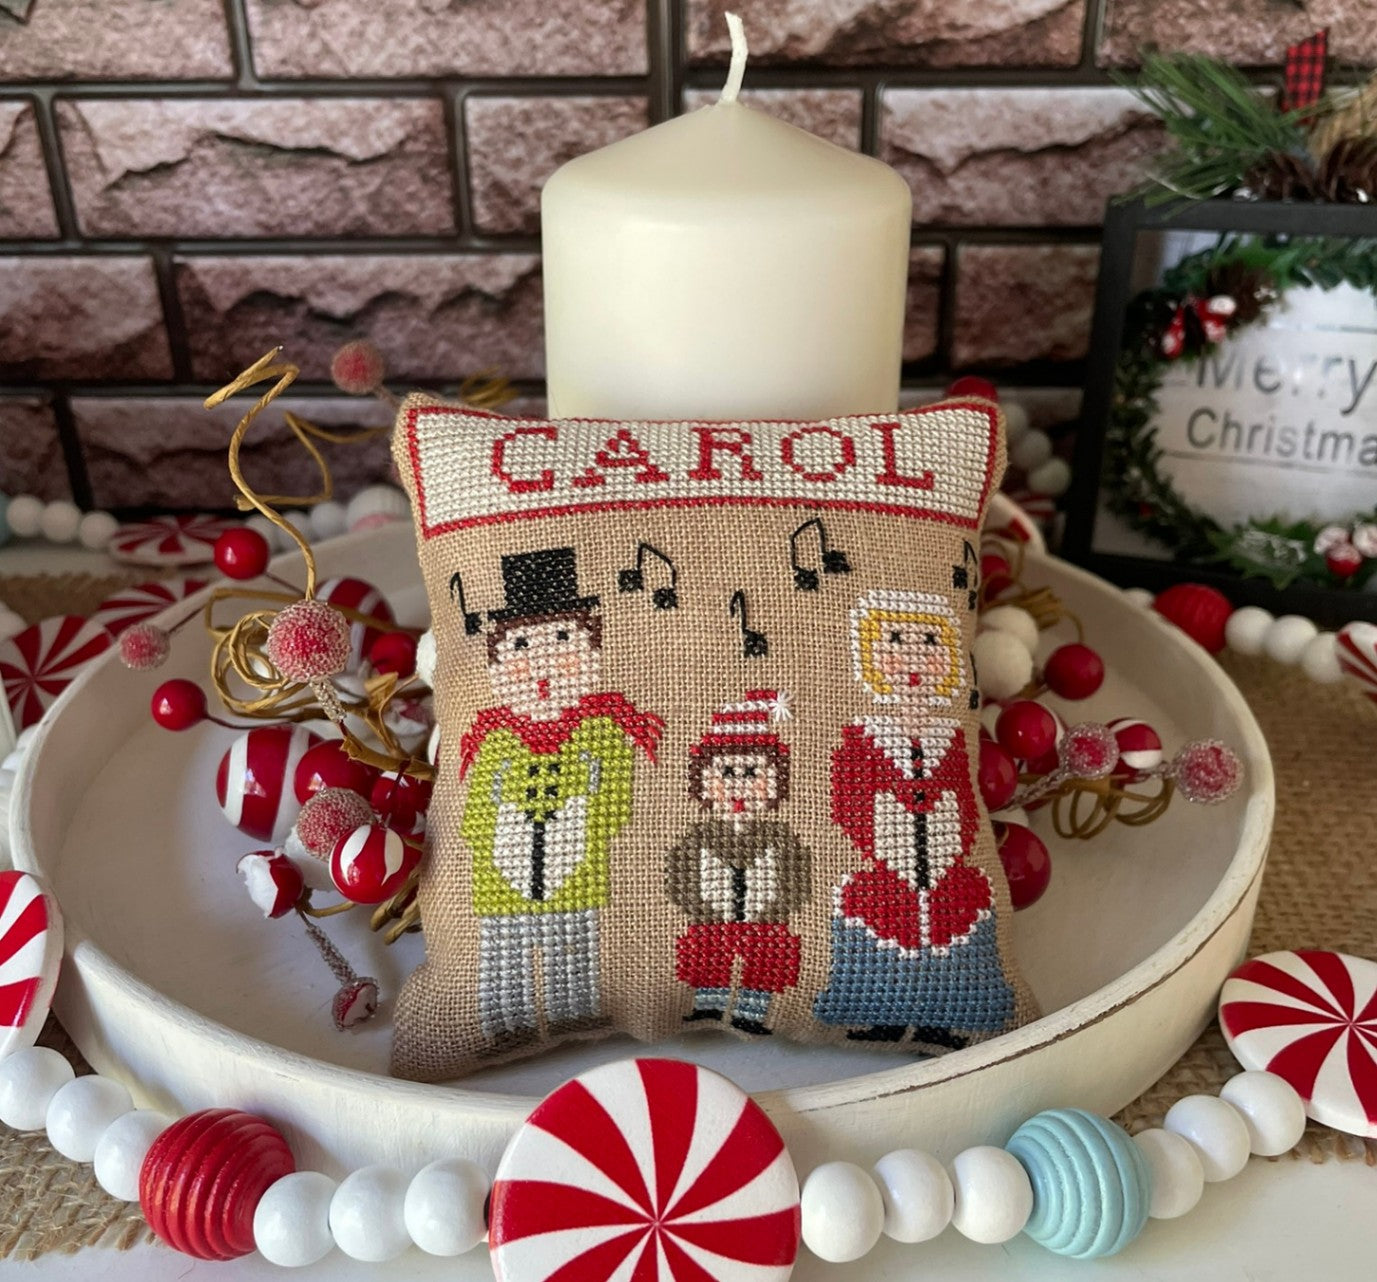 Carol - Joyful Christmas series